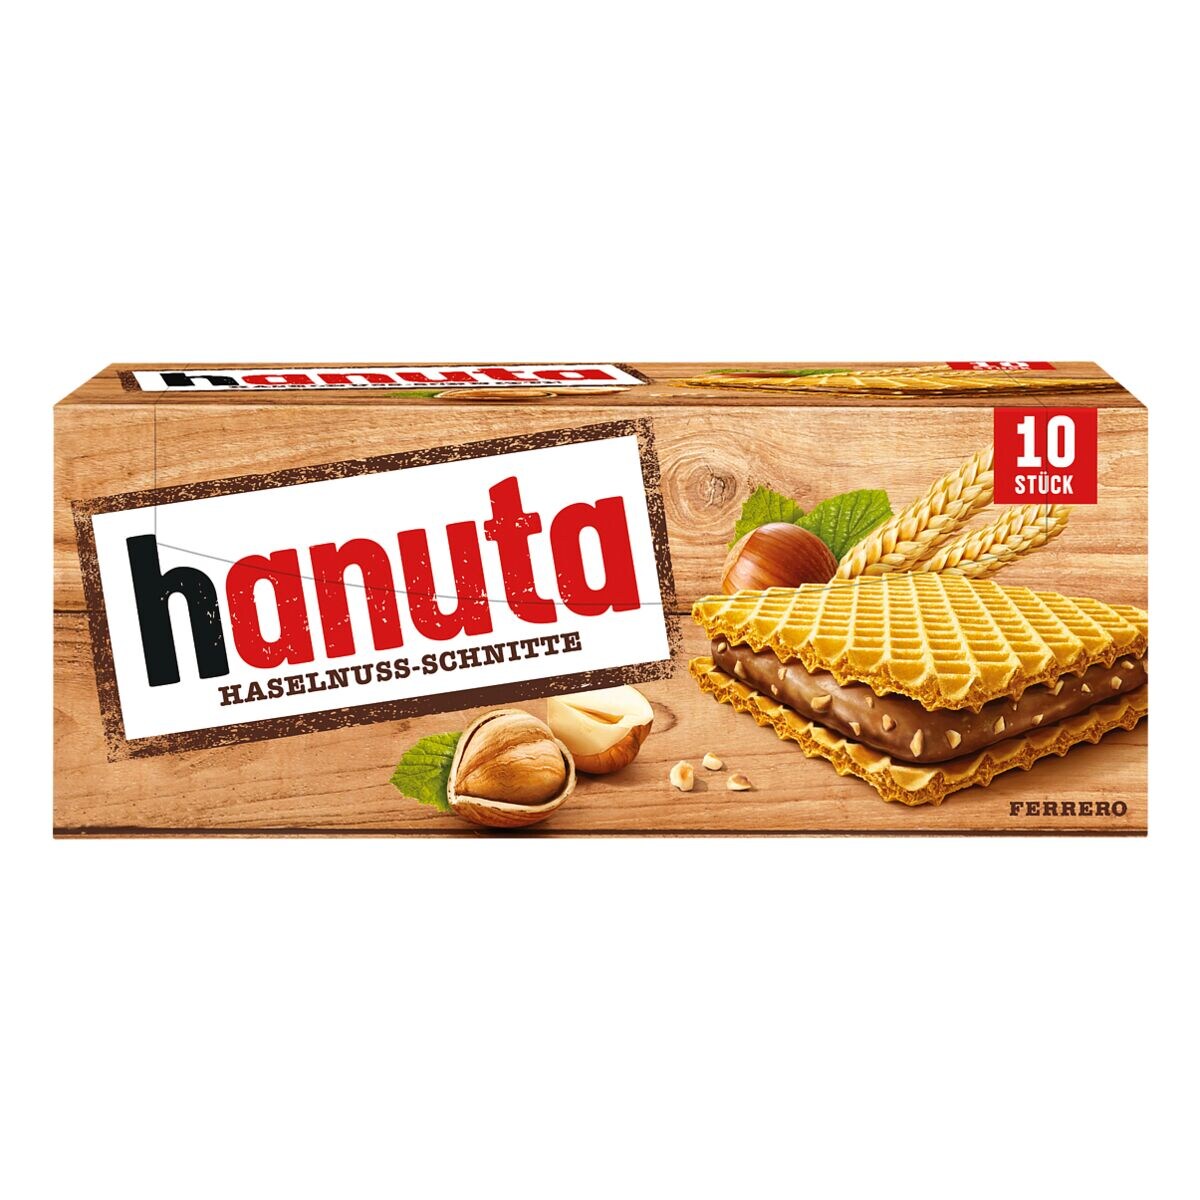 Hanuta Pak met 10x Hanuta